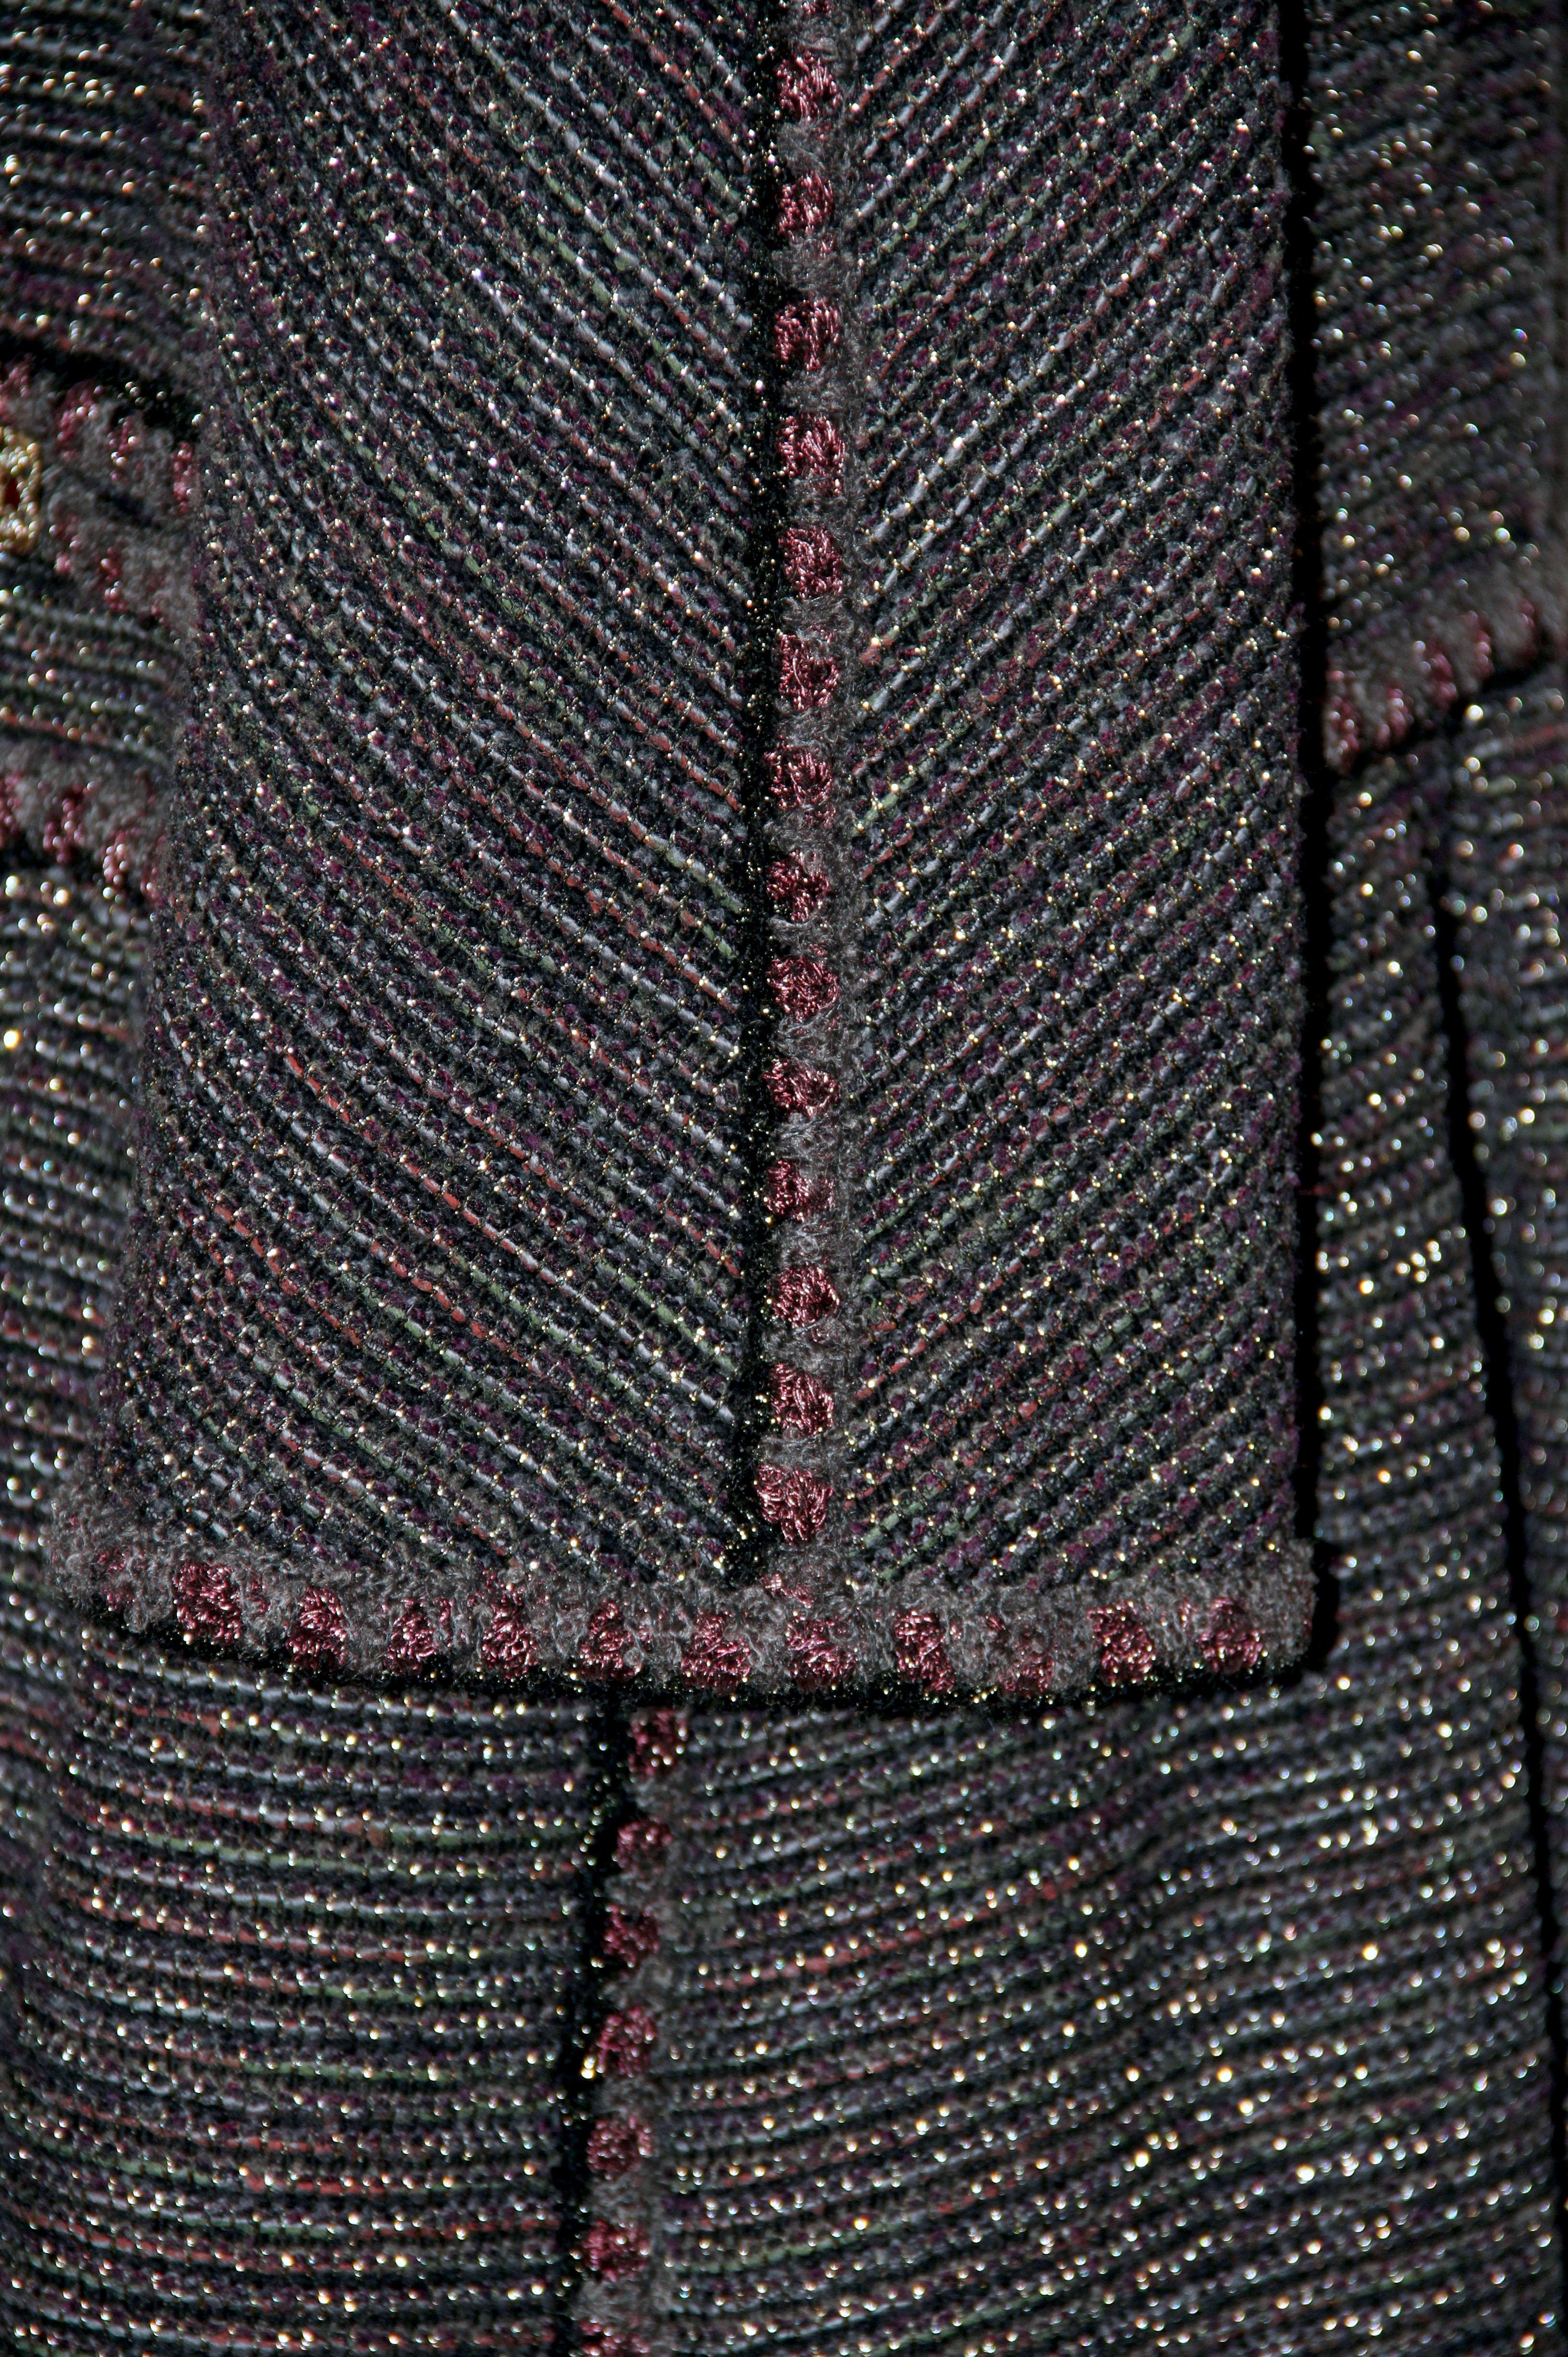 Women's Chanel Grey Burgundy Tweed Coat Fall 2011 Ready to Wear